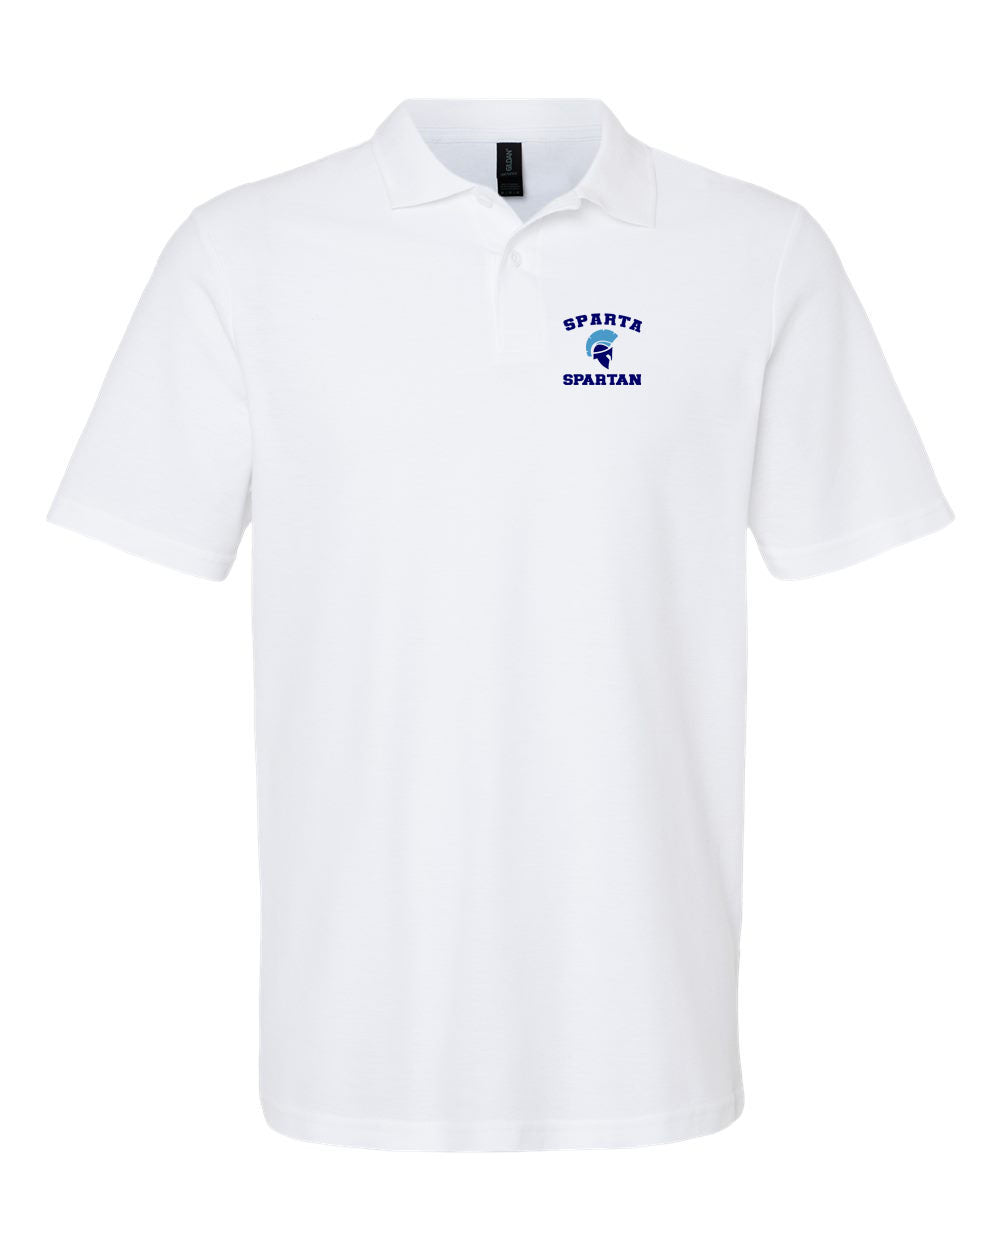 Sparta School Design 1 Polo T-Shirt